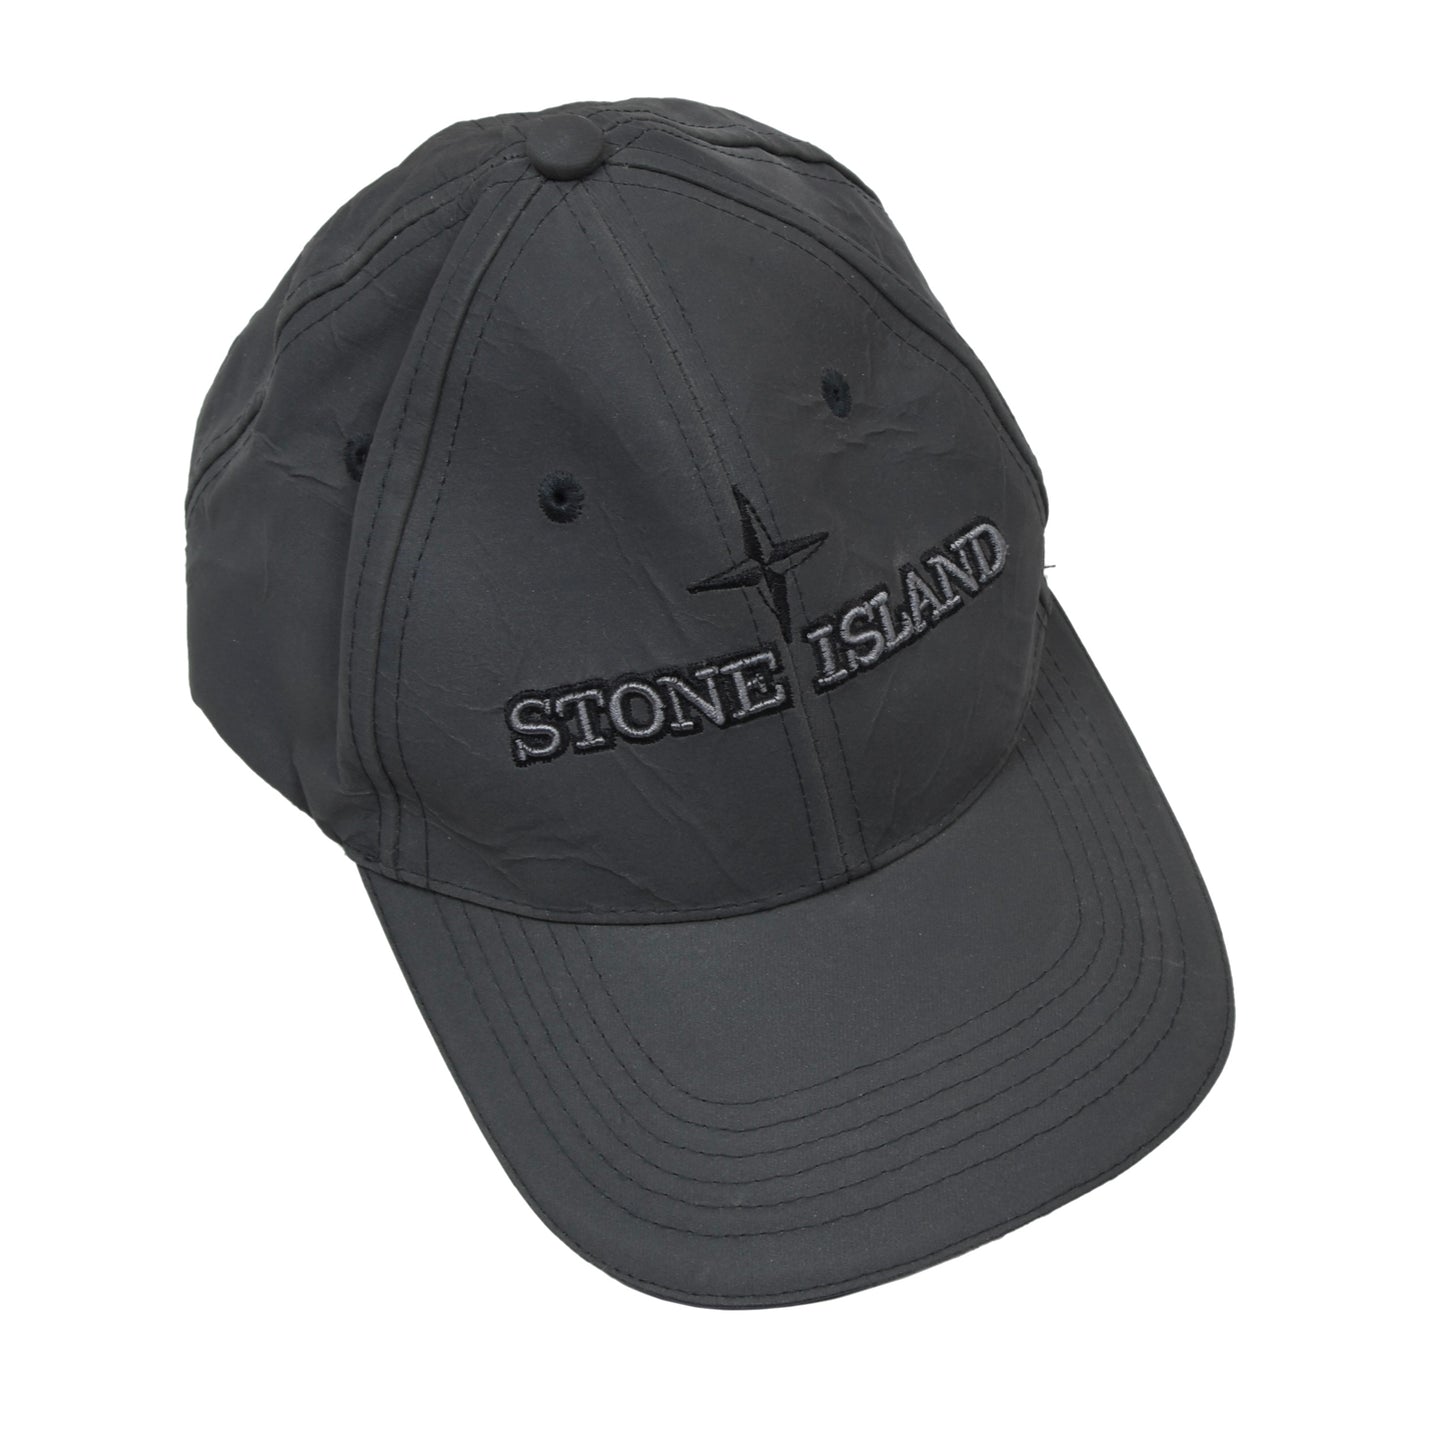 Stone Island 2006-2007 Reflective Baseball Hat One Size - Grey/Silver